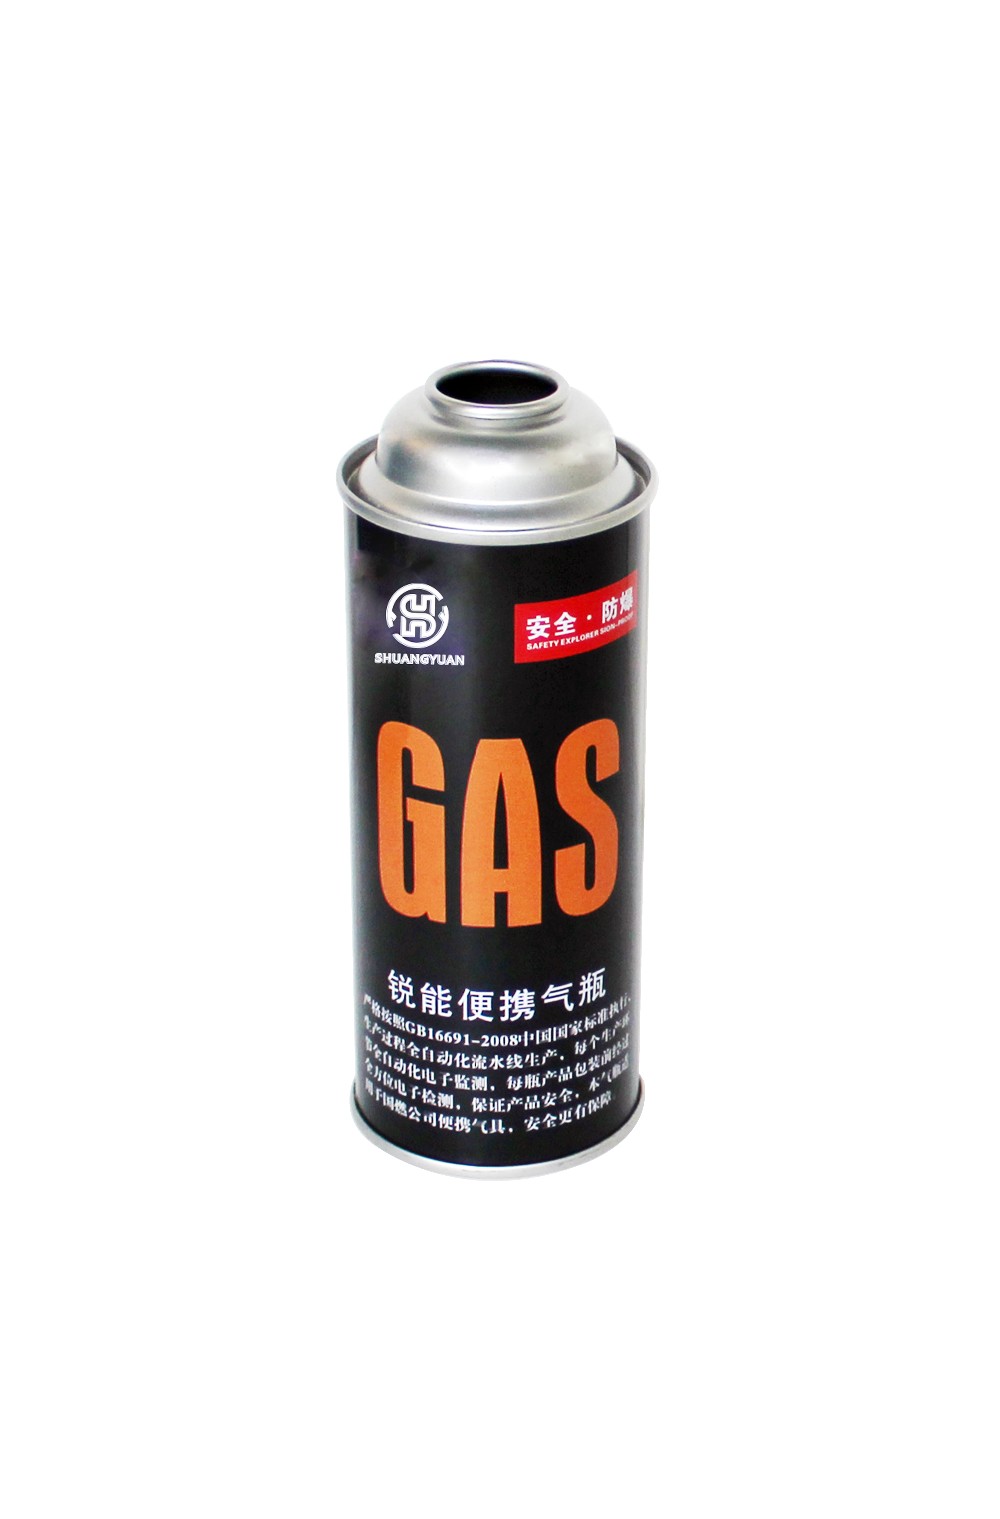 Versatile Butane Gas Cartridge for Portable Stoves and Camping Lanterns - 400ml Capacity